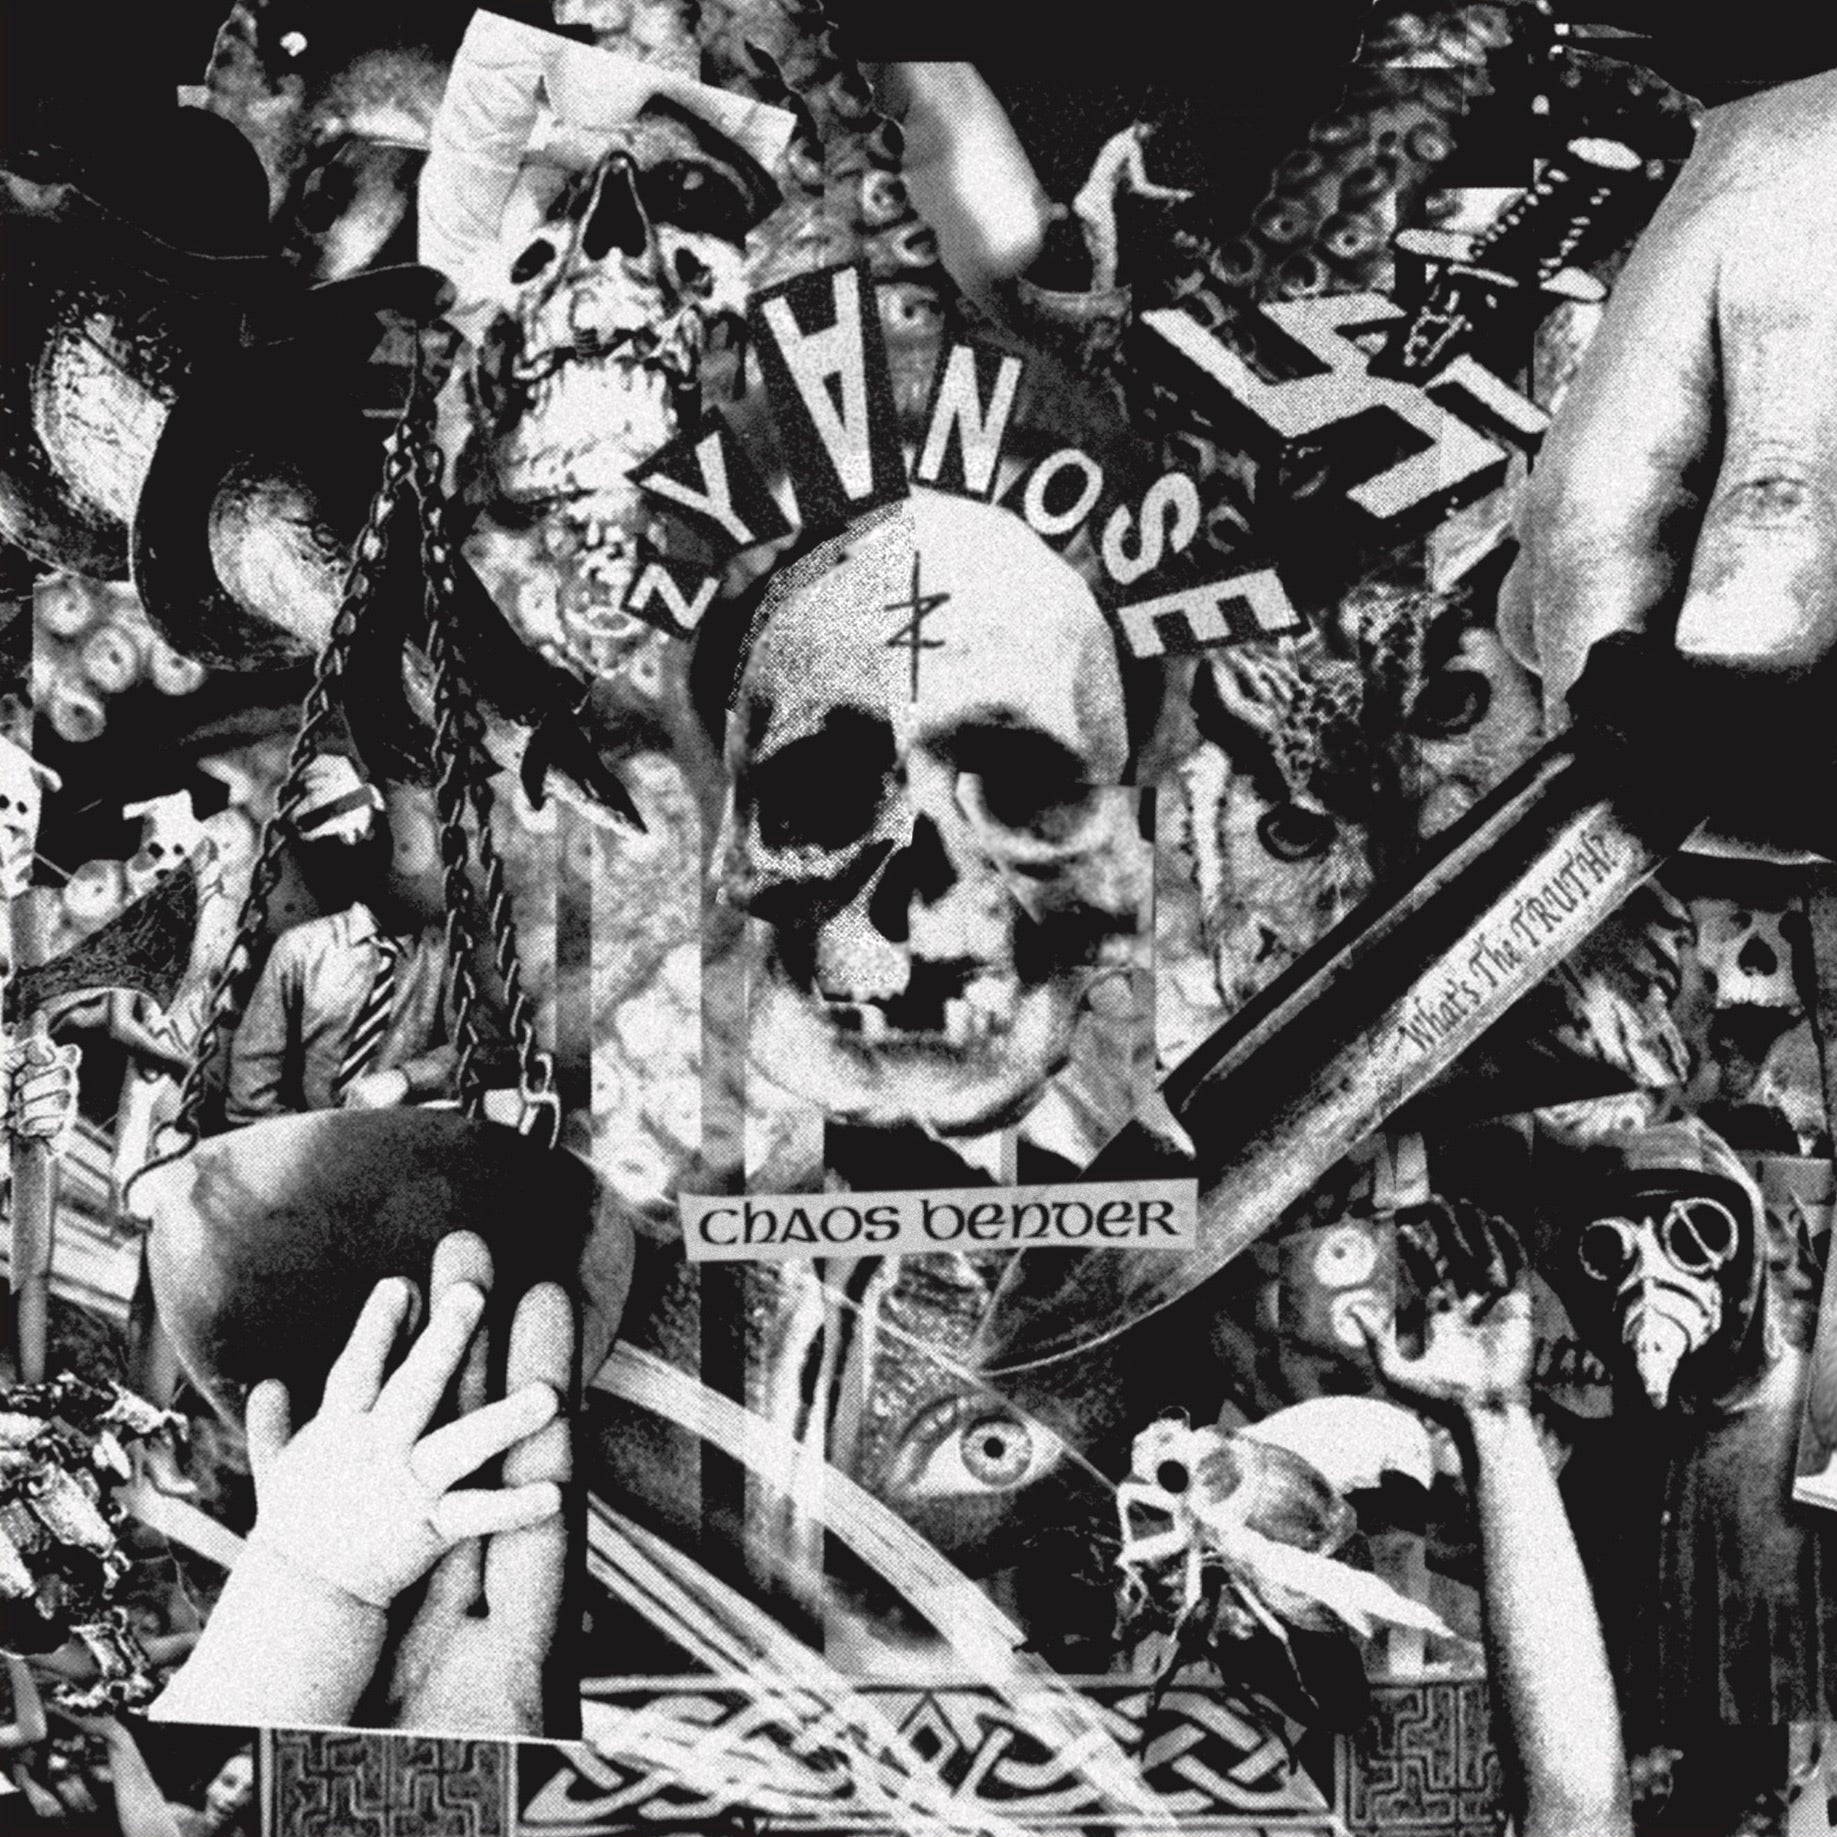 Zyanose - Chaos Bender - 12" - New LP